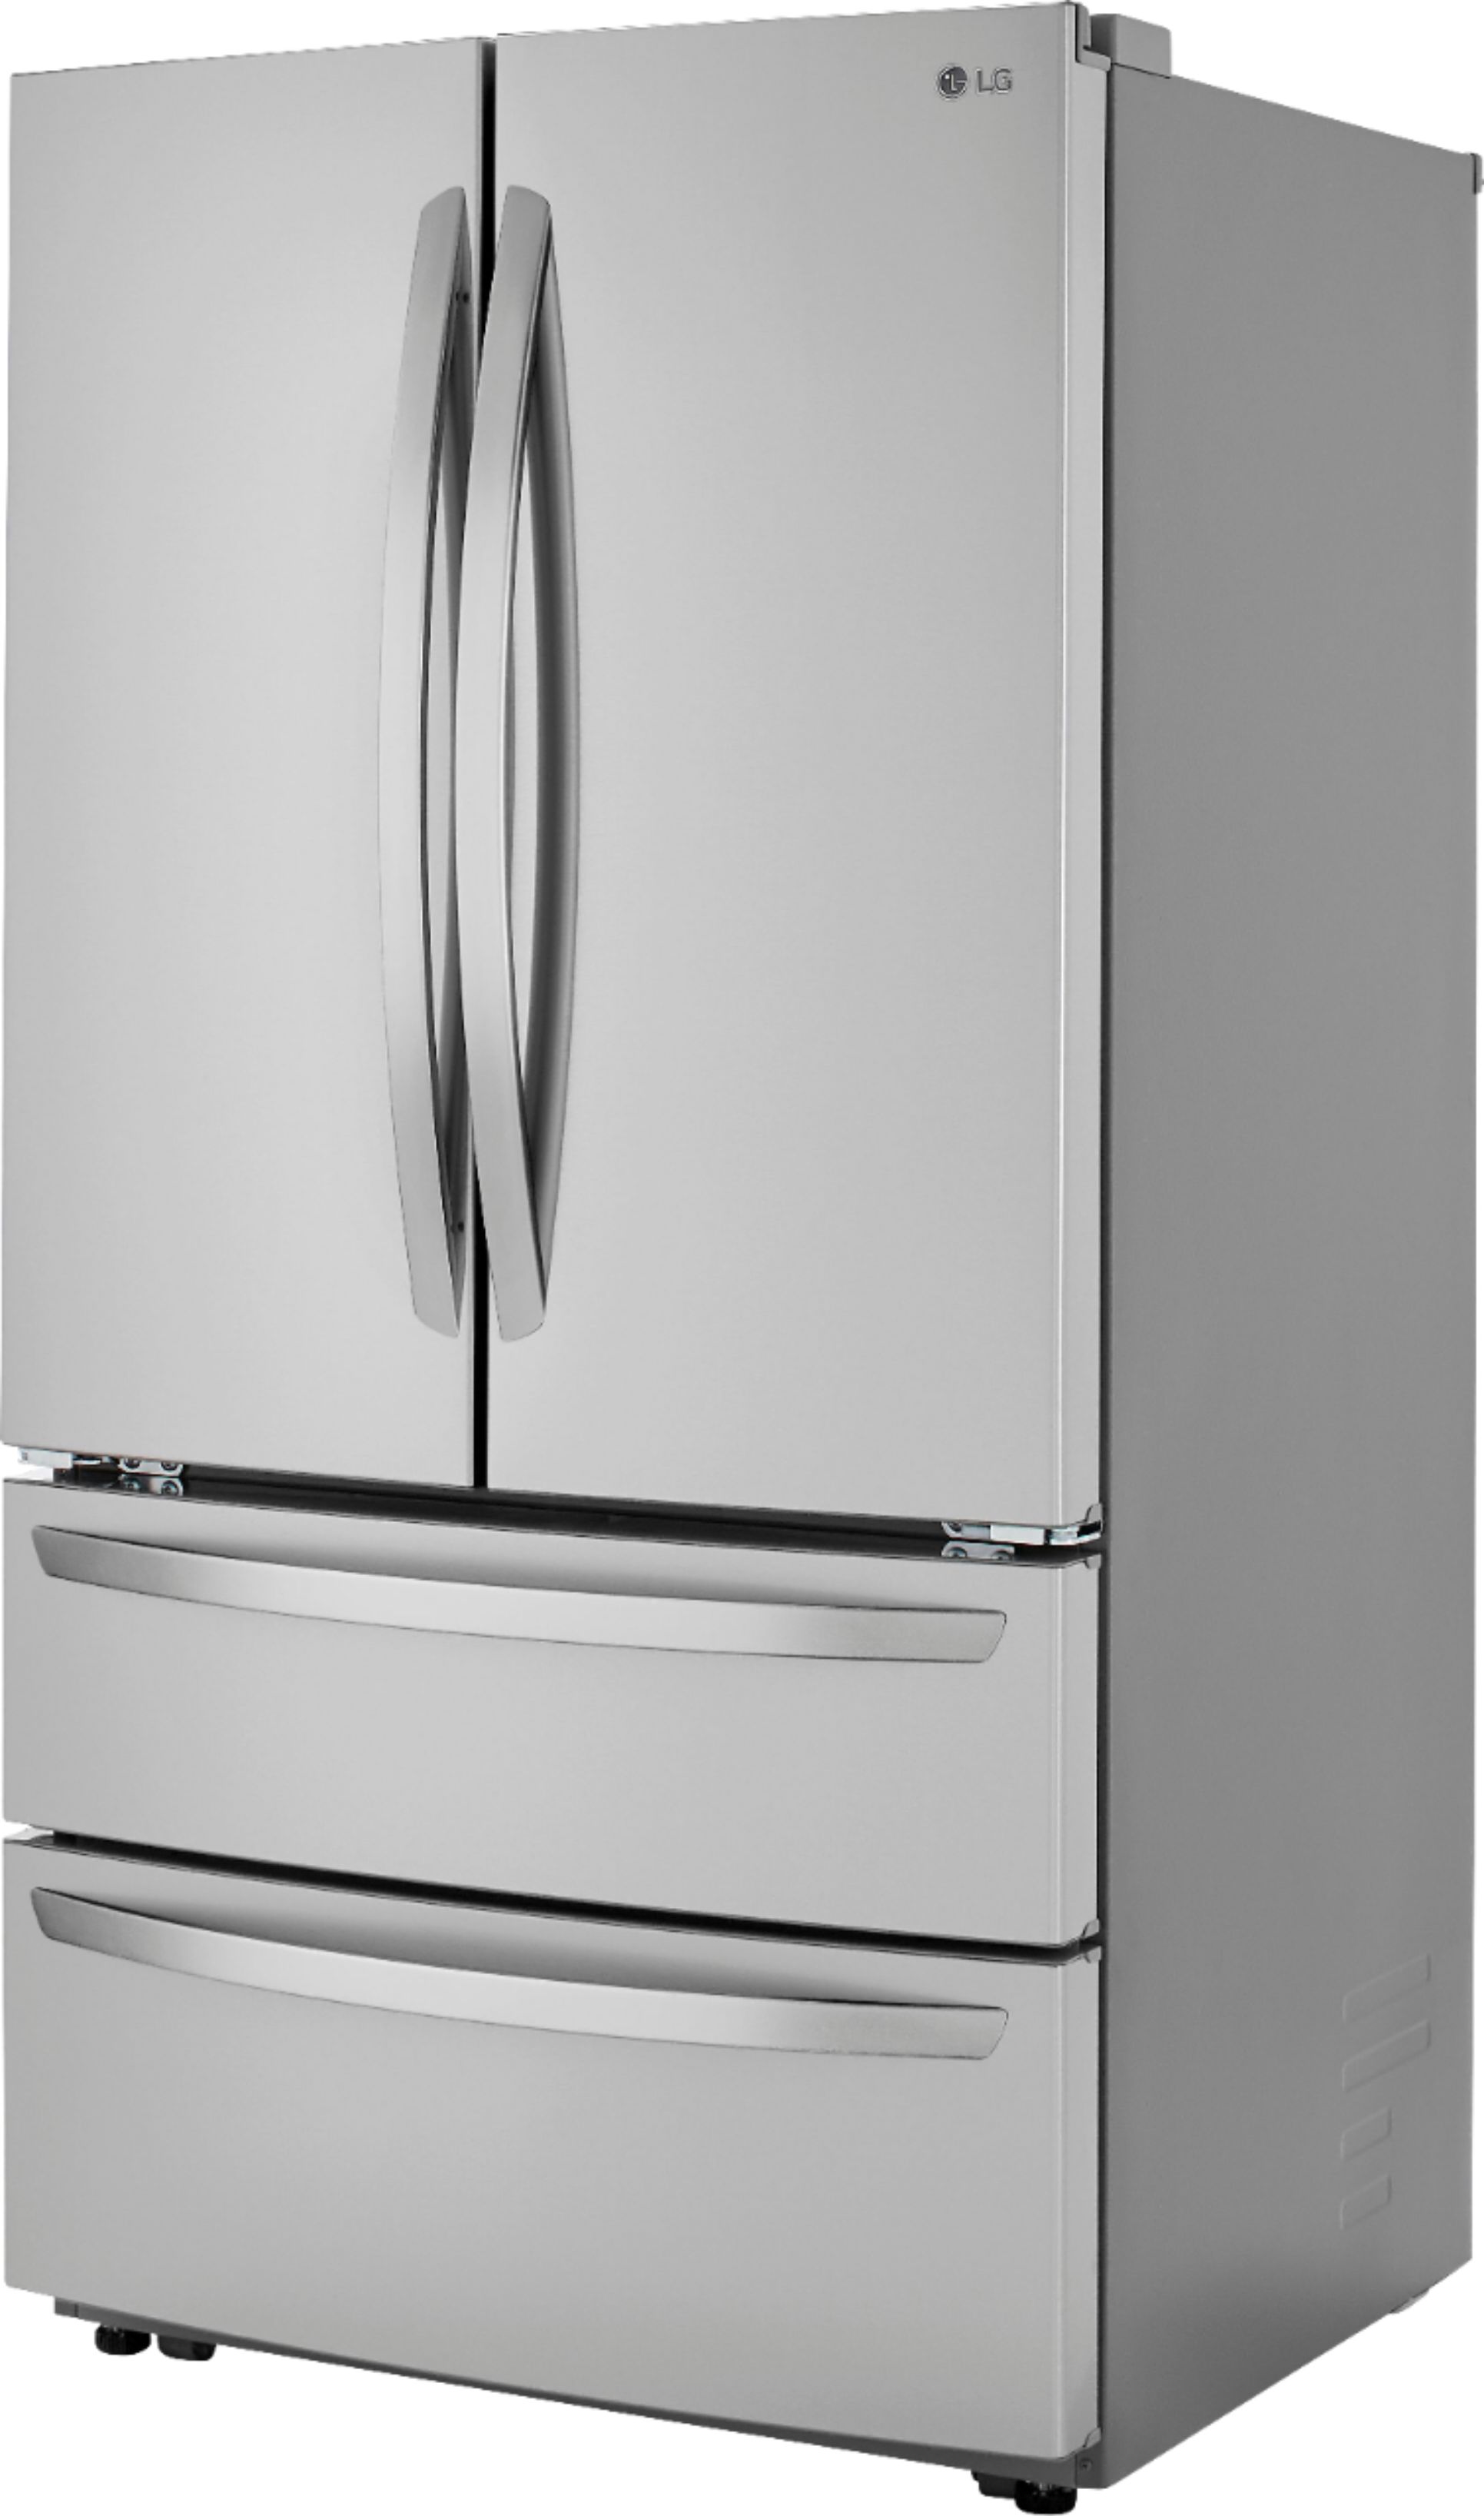 Left View: LG - 26.9 Cu. Ft. 4-Door French Door Refrigerator with Internal Water Dispenser and Icemaker - Stainless steel